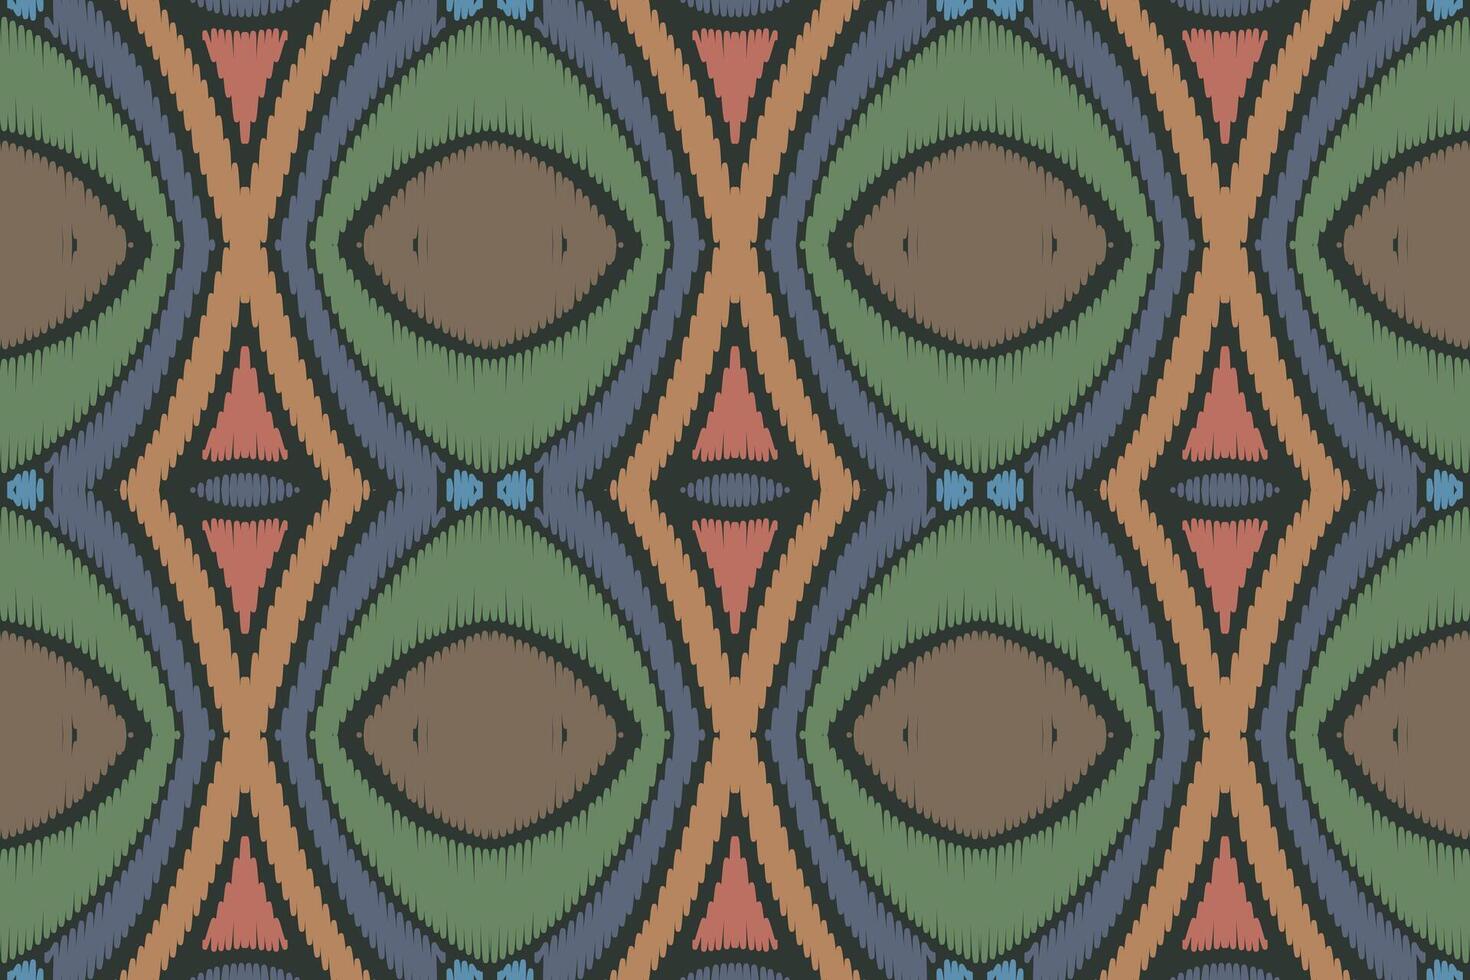 ikat diseña un patrón cruzado tribal sin costuras. étnico geométrico batik ikkat vector digital diseño textil para estampados tela sari mughal cepillo símbolo franjas textura kurti kurtis kurtas